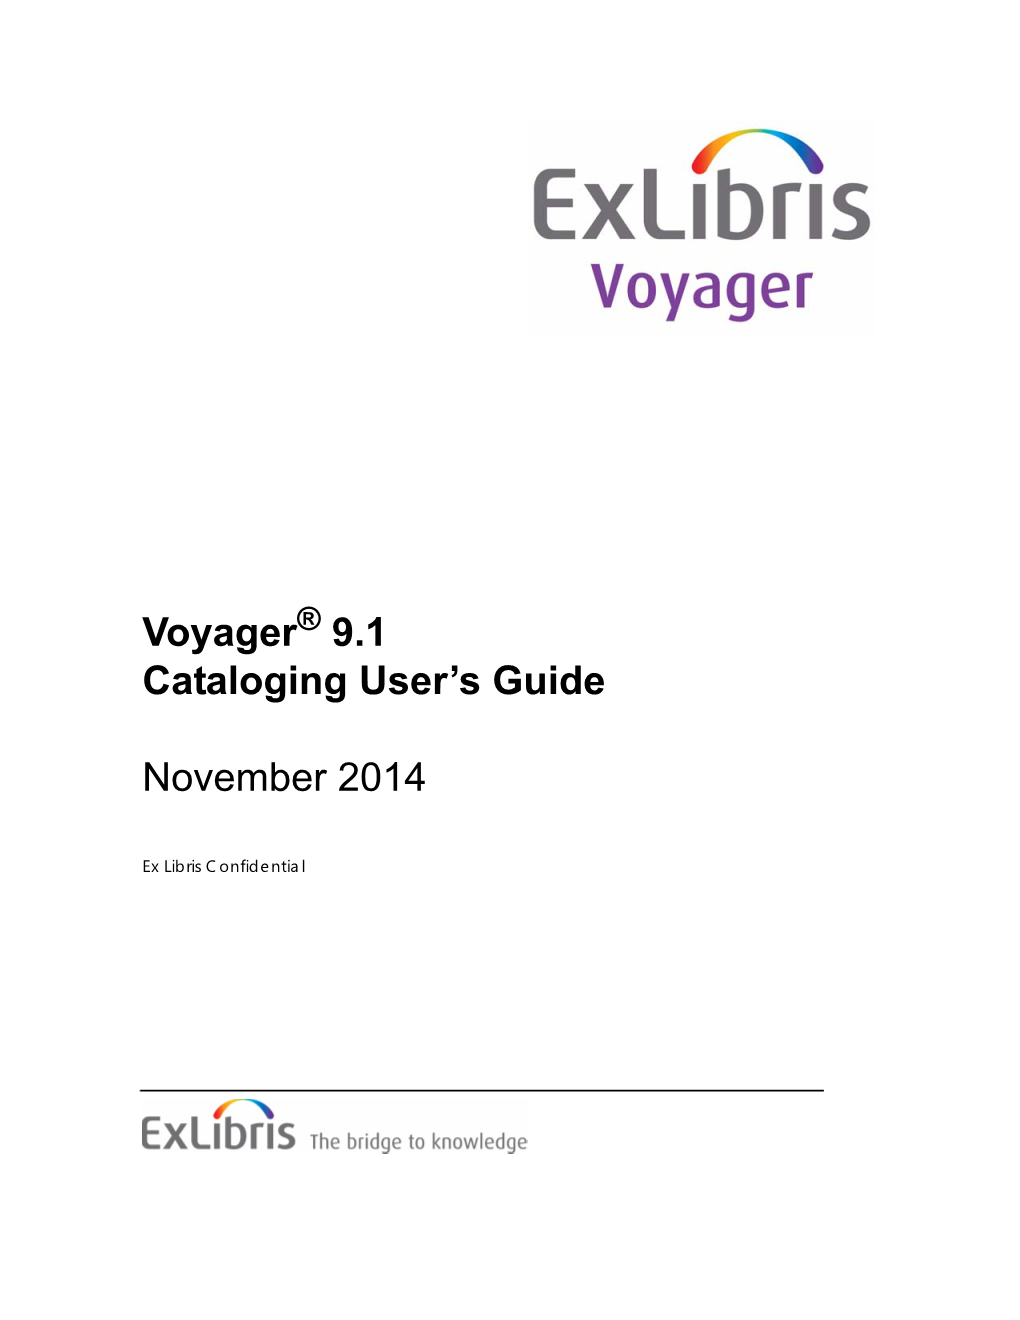 Cataloging User's Guide